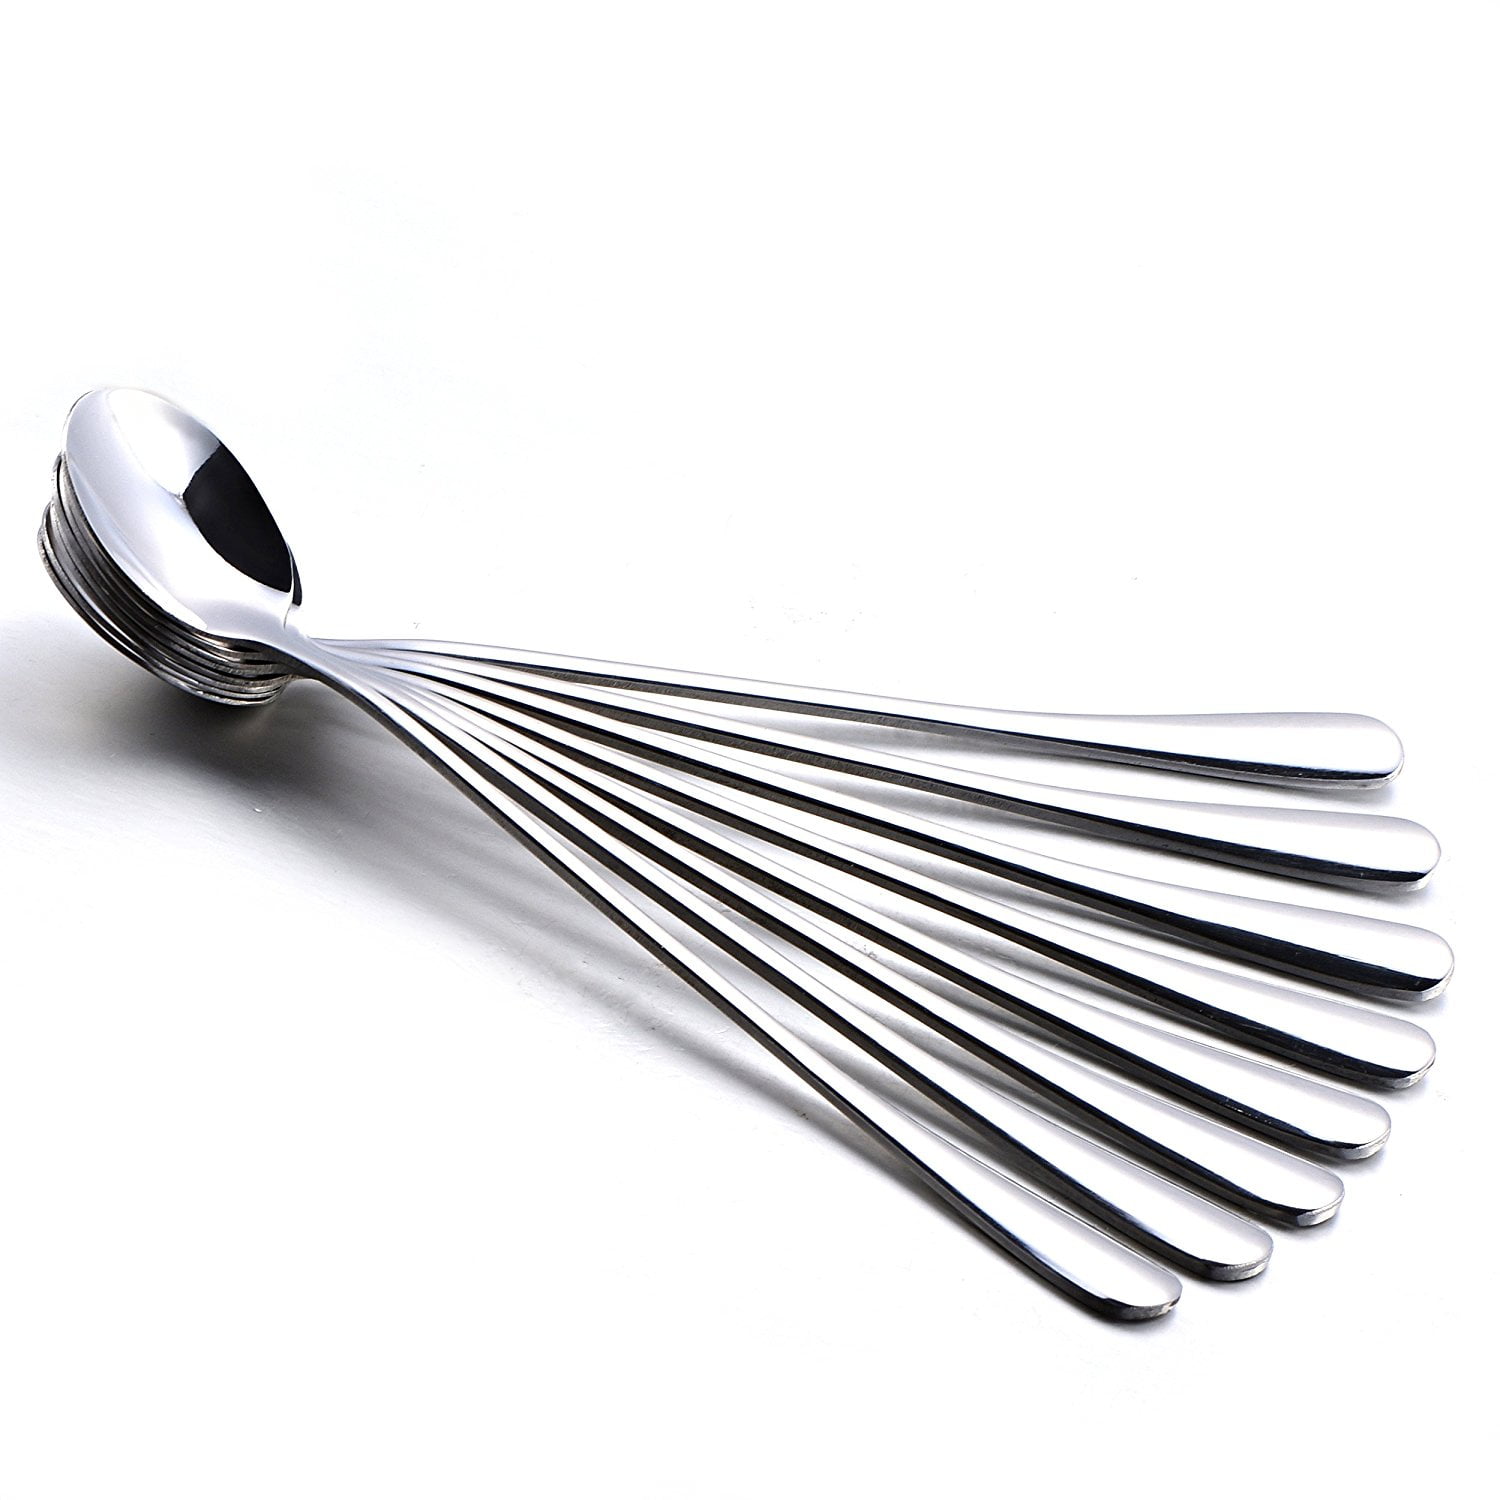 Heavy Duty Teaspoon Set Tea spoons Stainless Steel Spoons Great Quality 